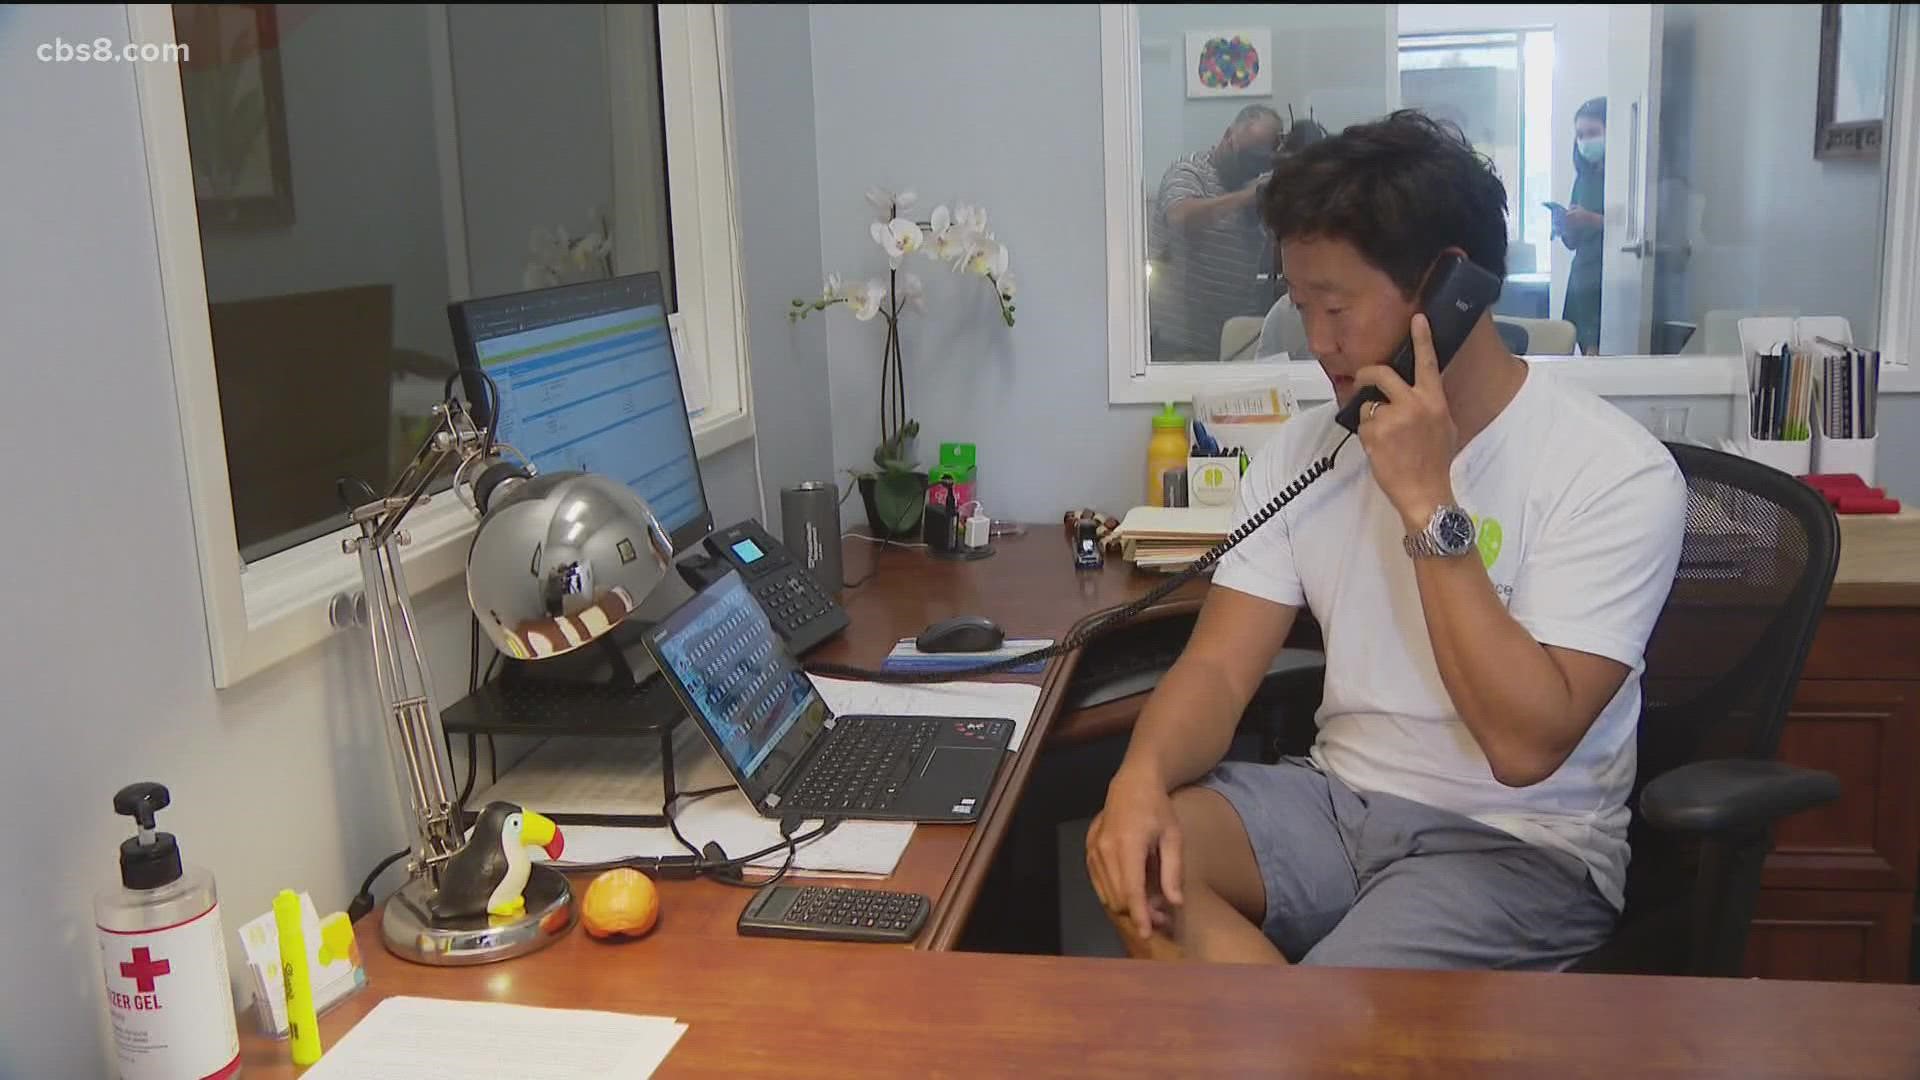 Jon Pak is one of many Korean Americans in San Diego who speaks fluent Spanish.